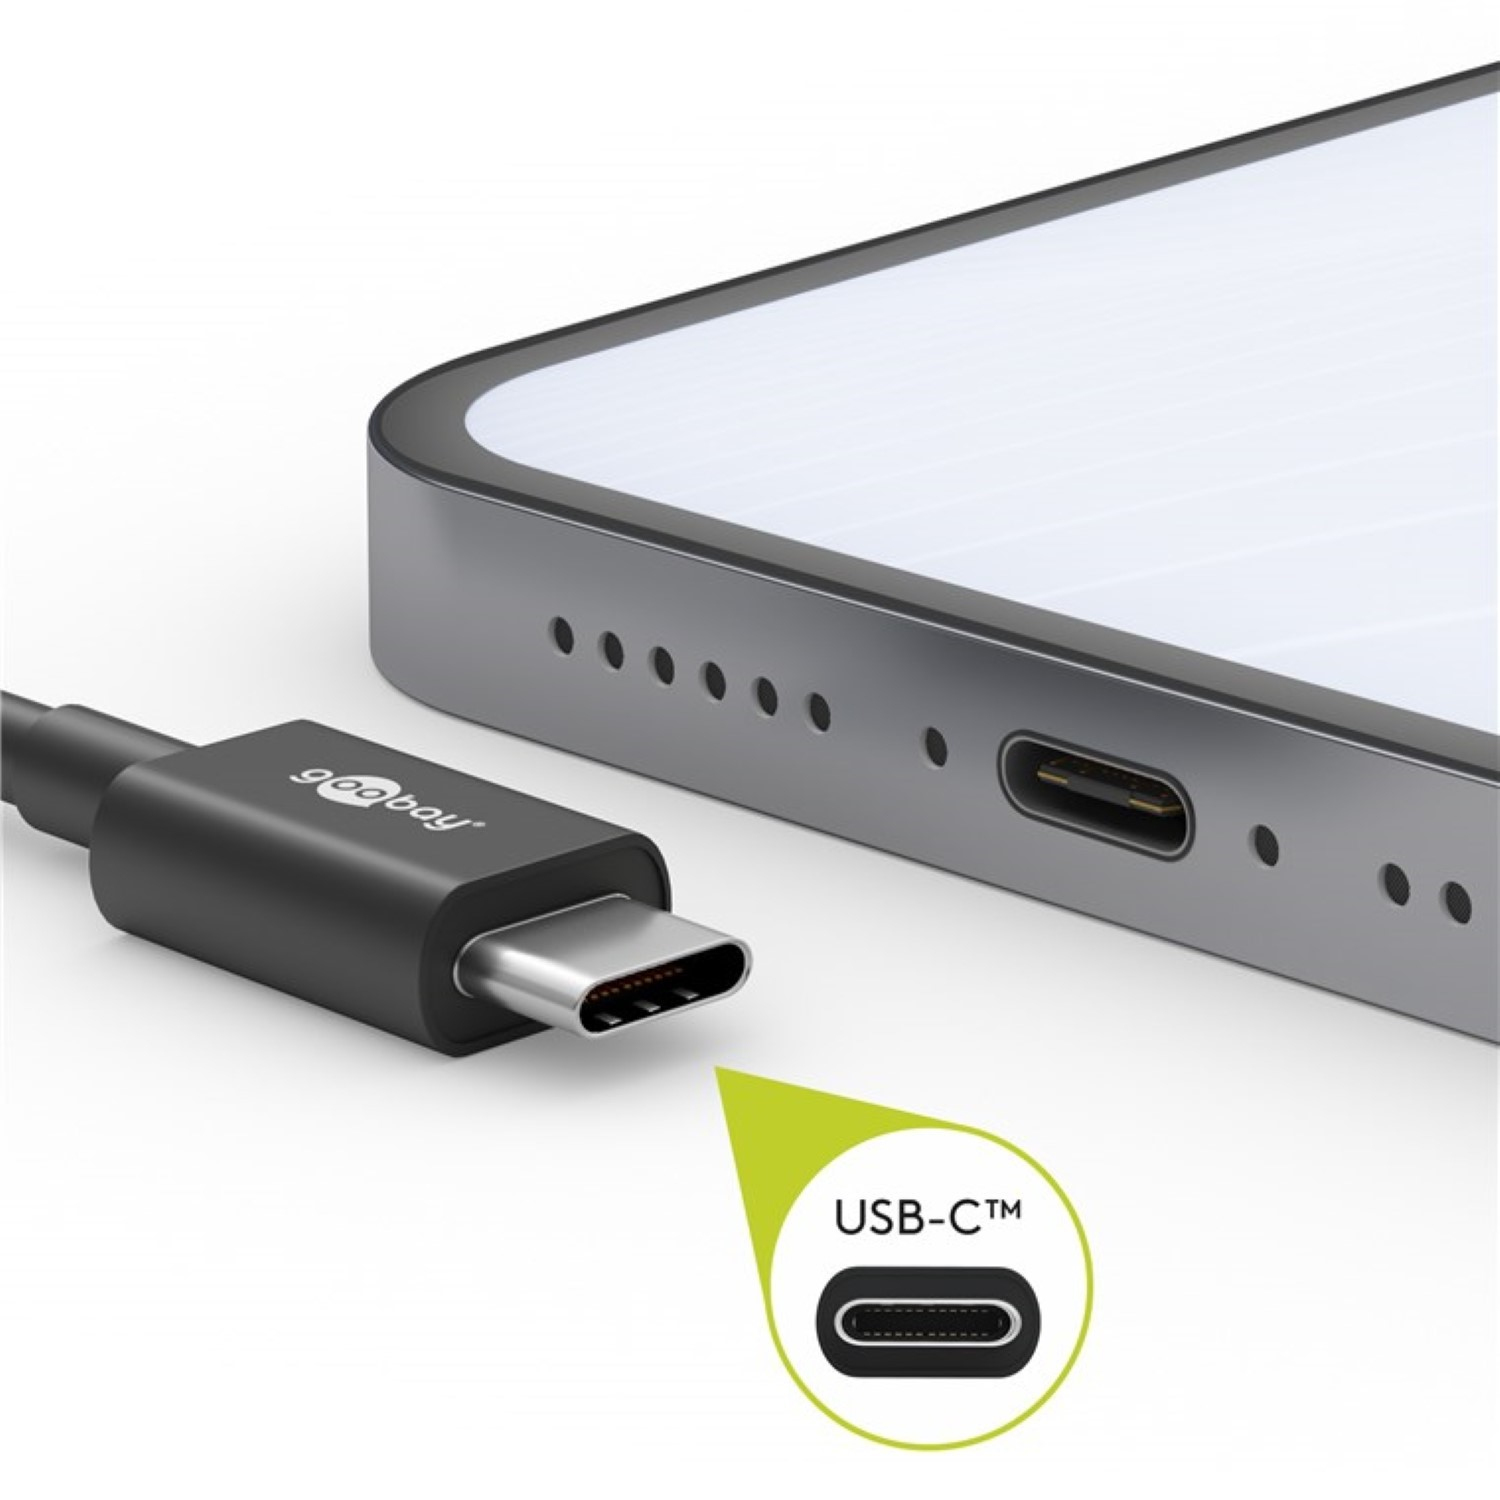 USB Lade-/Datenkabel ausziehbar schwarz GOOBAY Datenkabel, Kabel C Ladekabel